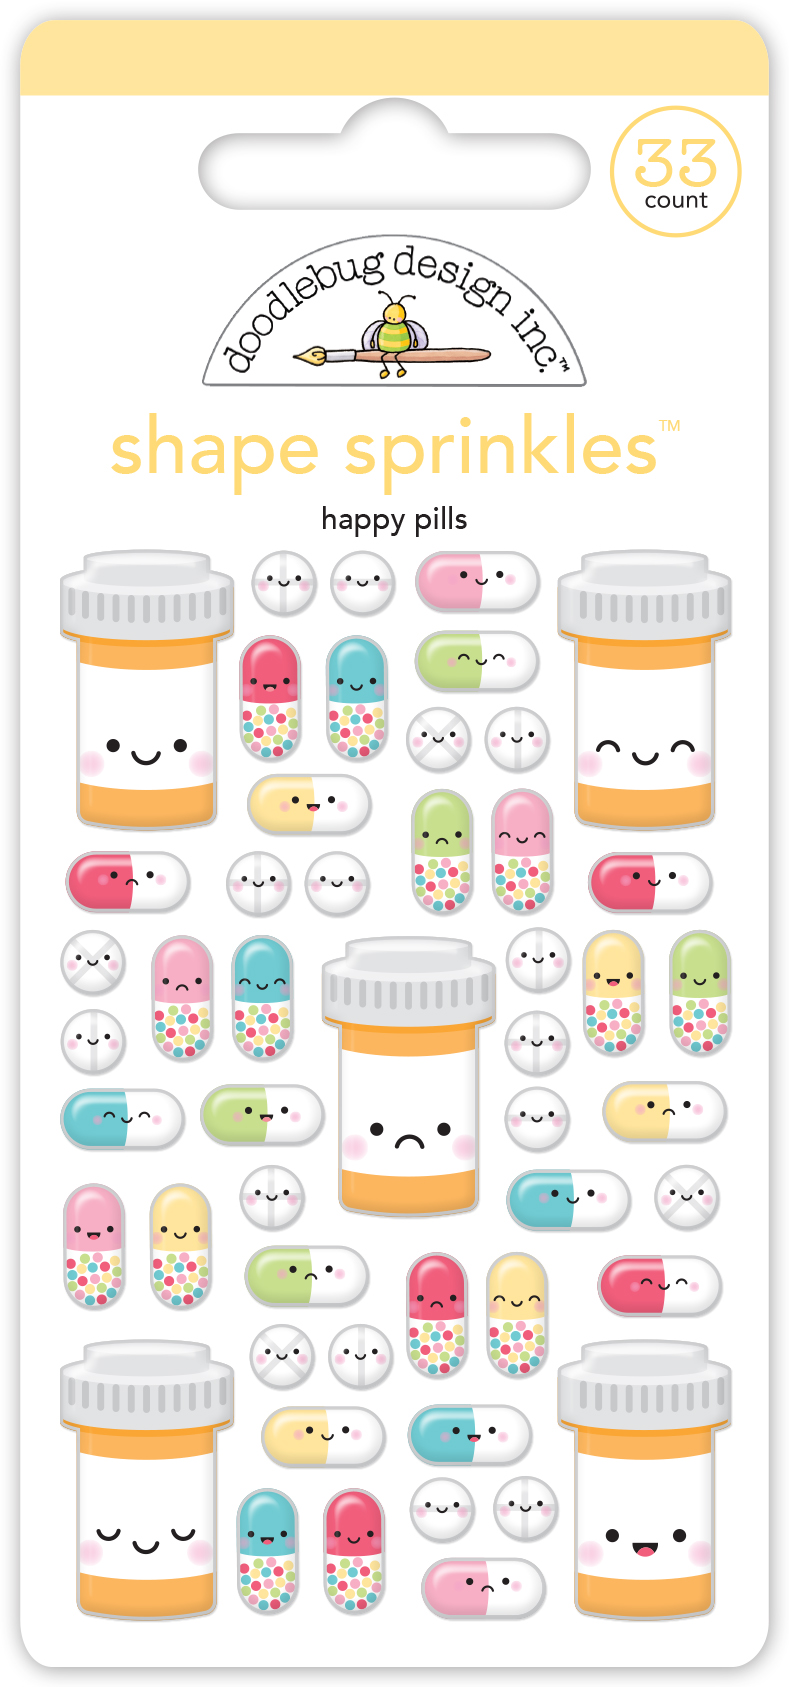 Doodlebug Happy Healing Happy Pills Shape Sprinkles